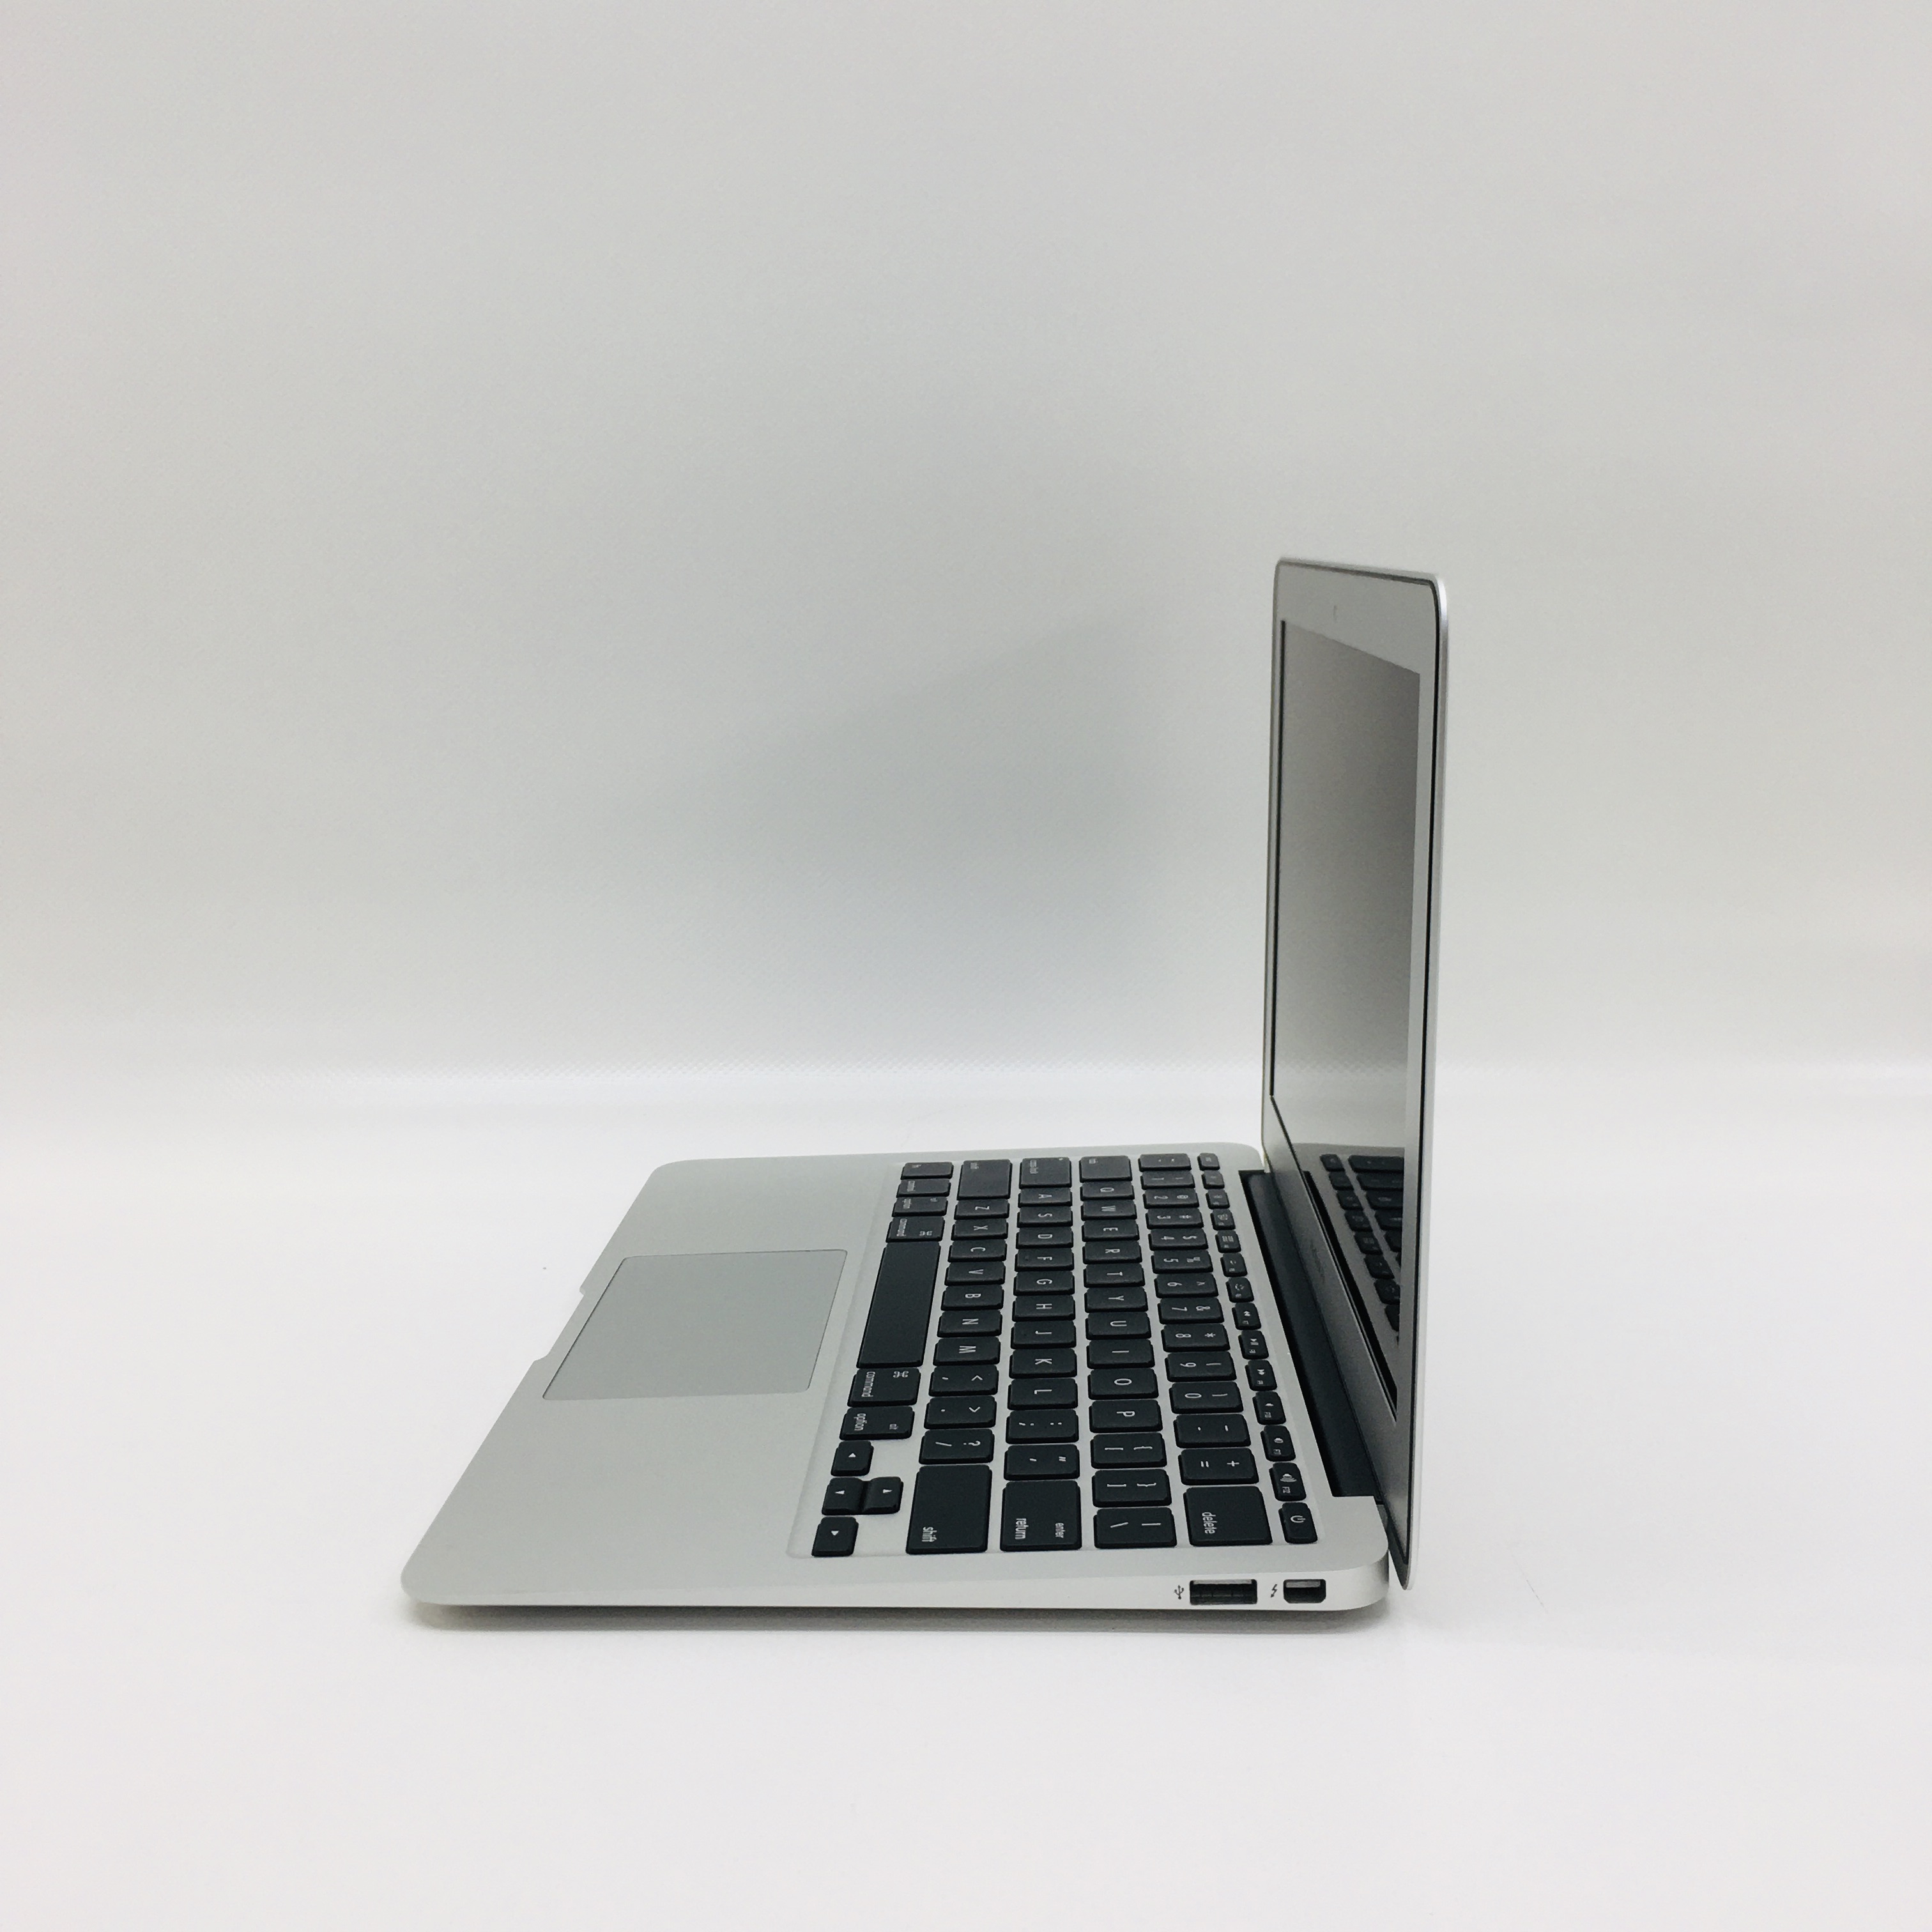 MacBook Air 11" Early 2015 (Intel Core i5 1.6 GHz 4 GB RAM 512 GB SSD), Intel Core i5 1.6 GHz, 4 GB RAM, 512 GB SSD, image 5